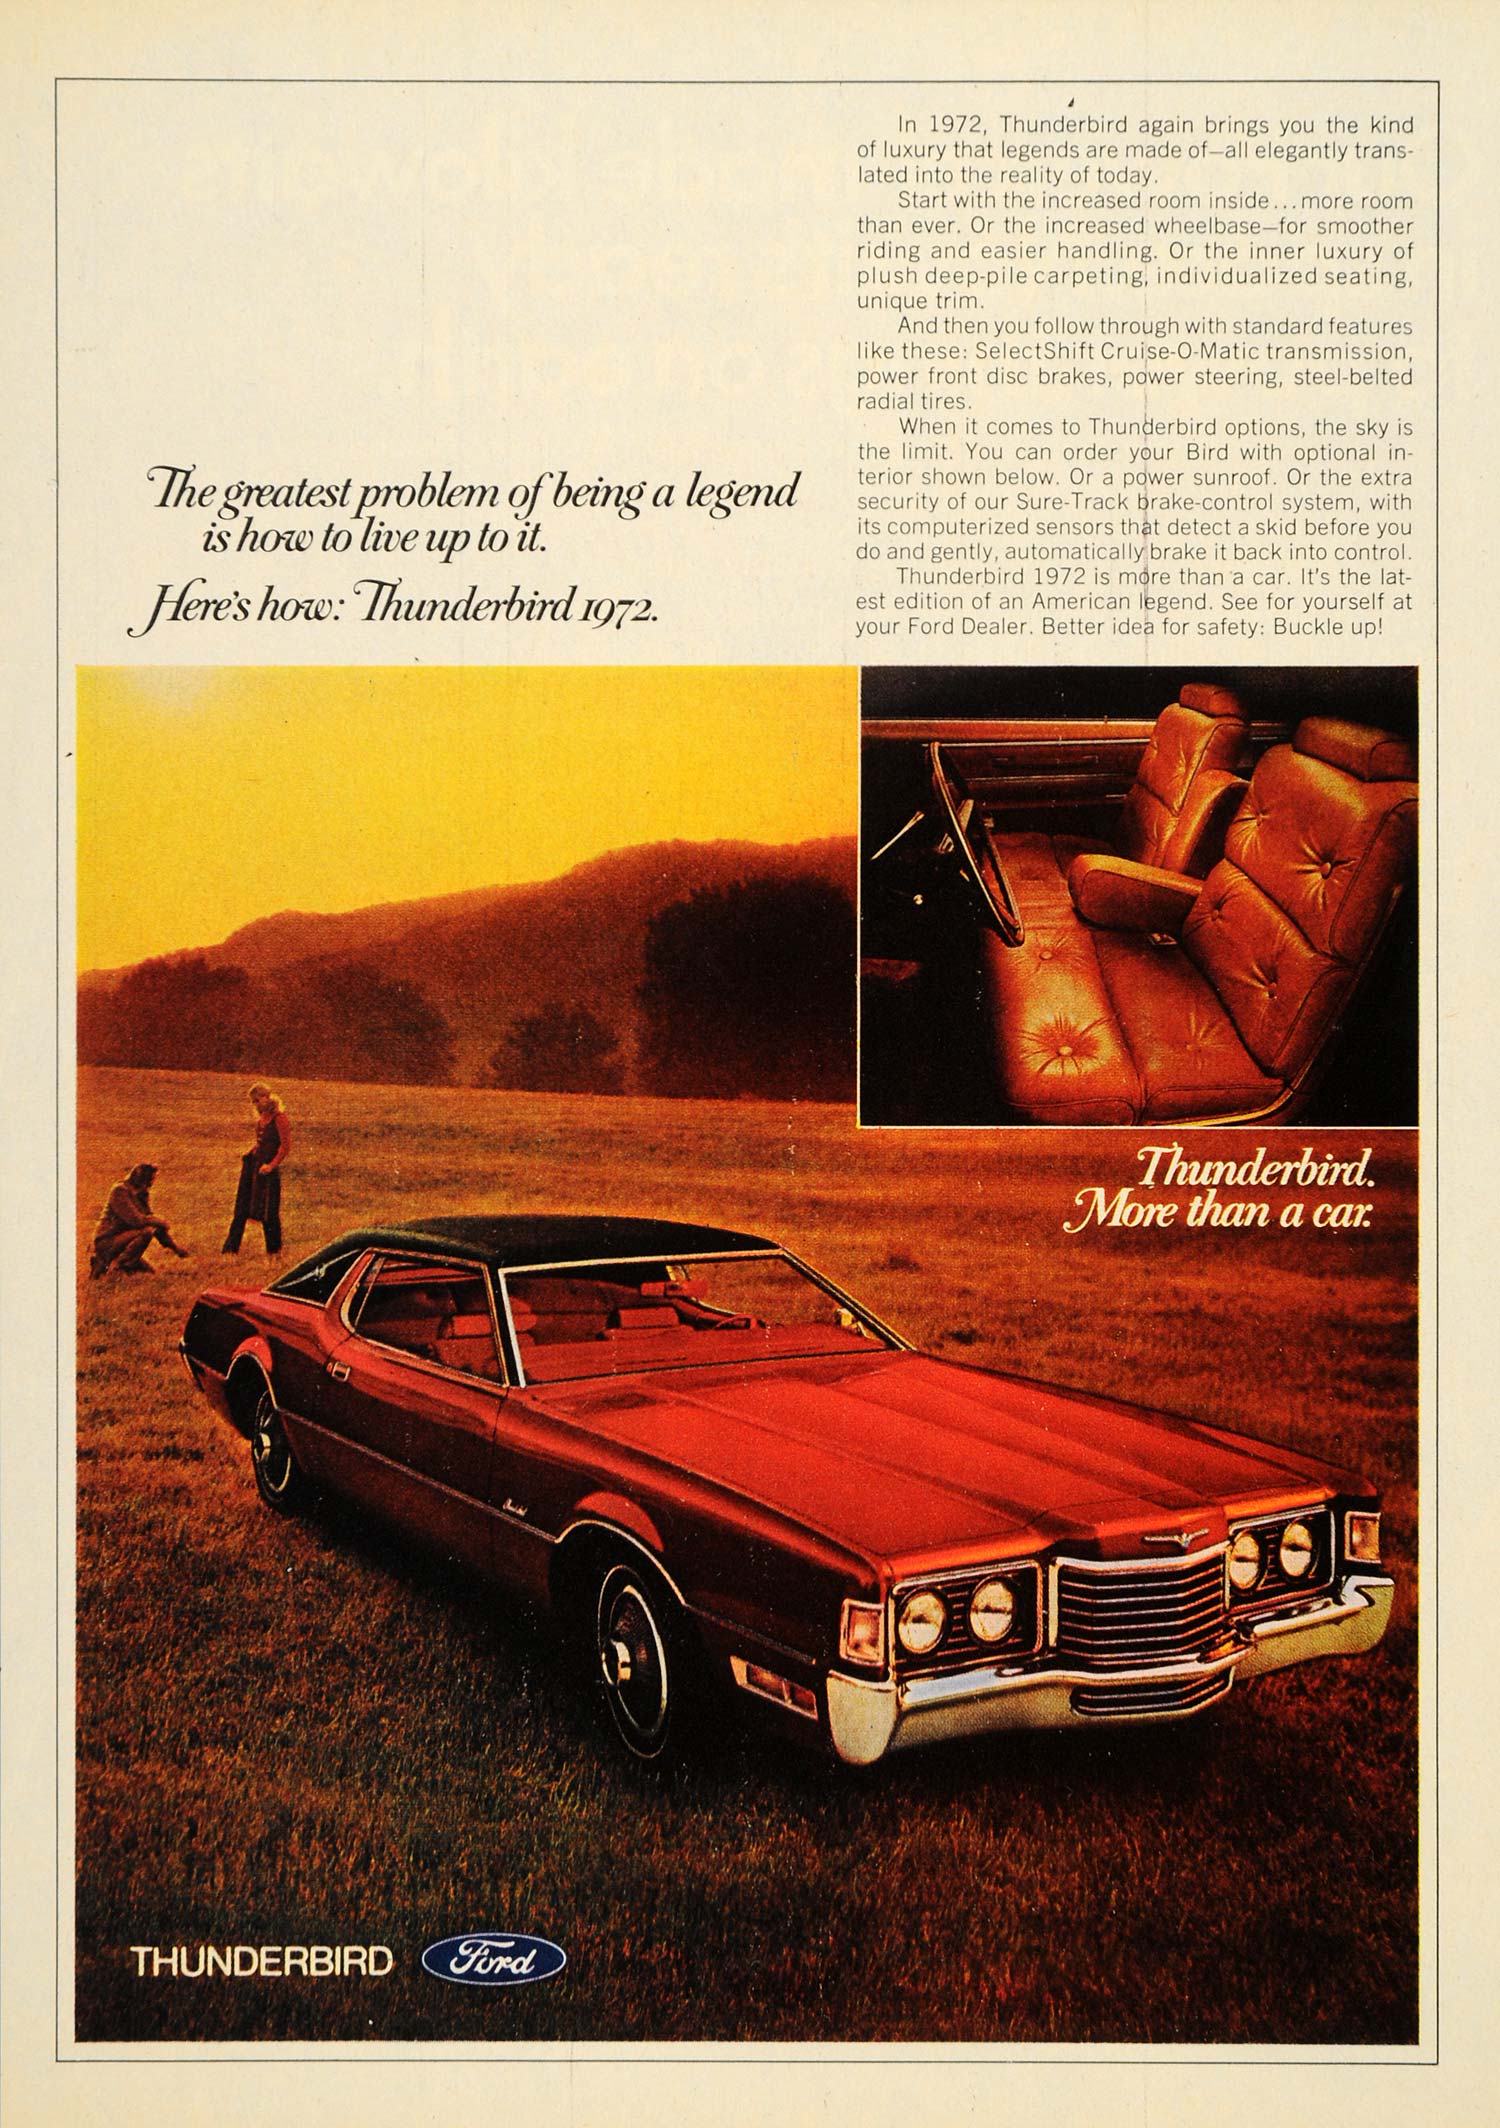 1971 Ad '72 Ford Thunderbird Steel-Belted Radial Tires - ORIGINAL TM3